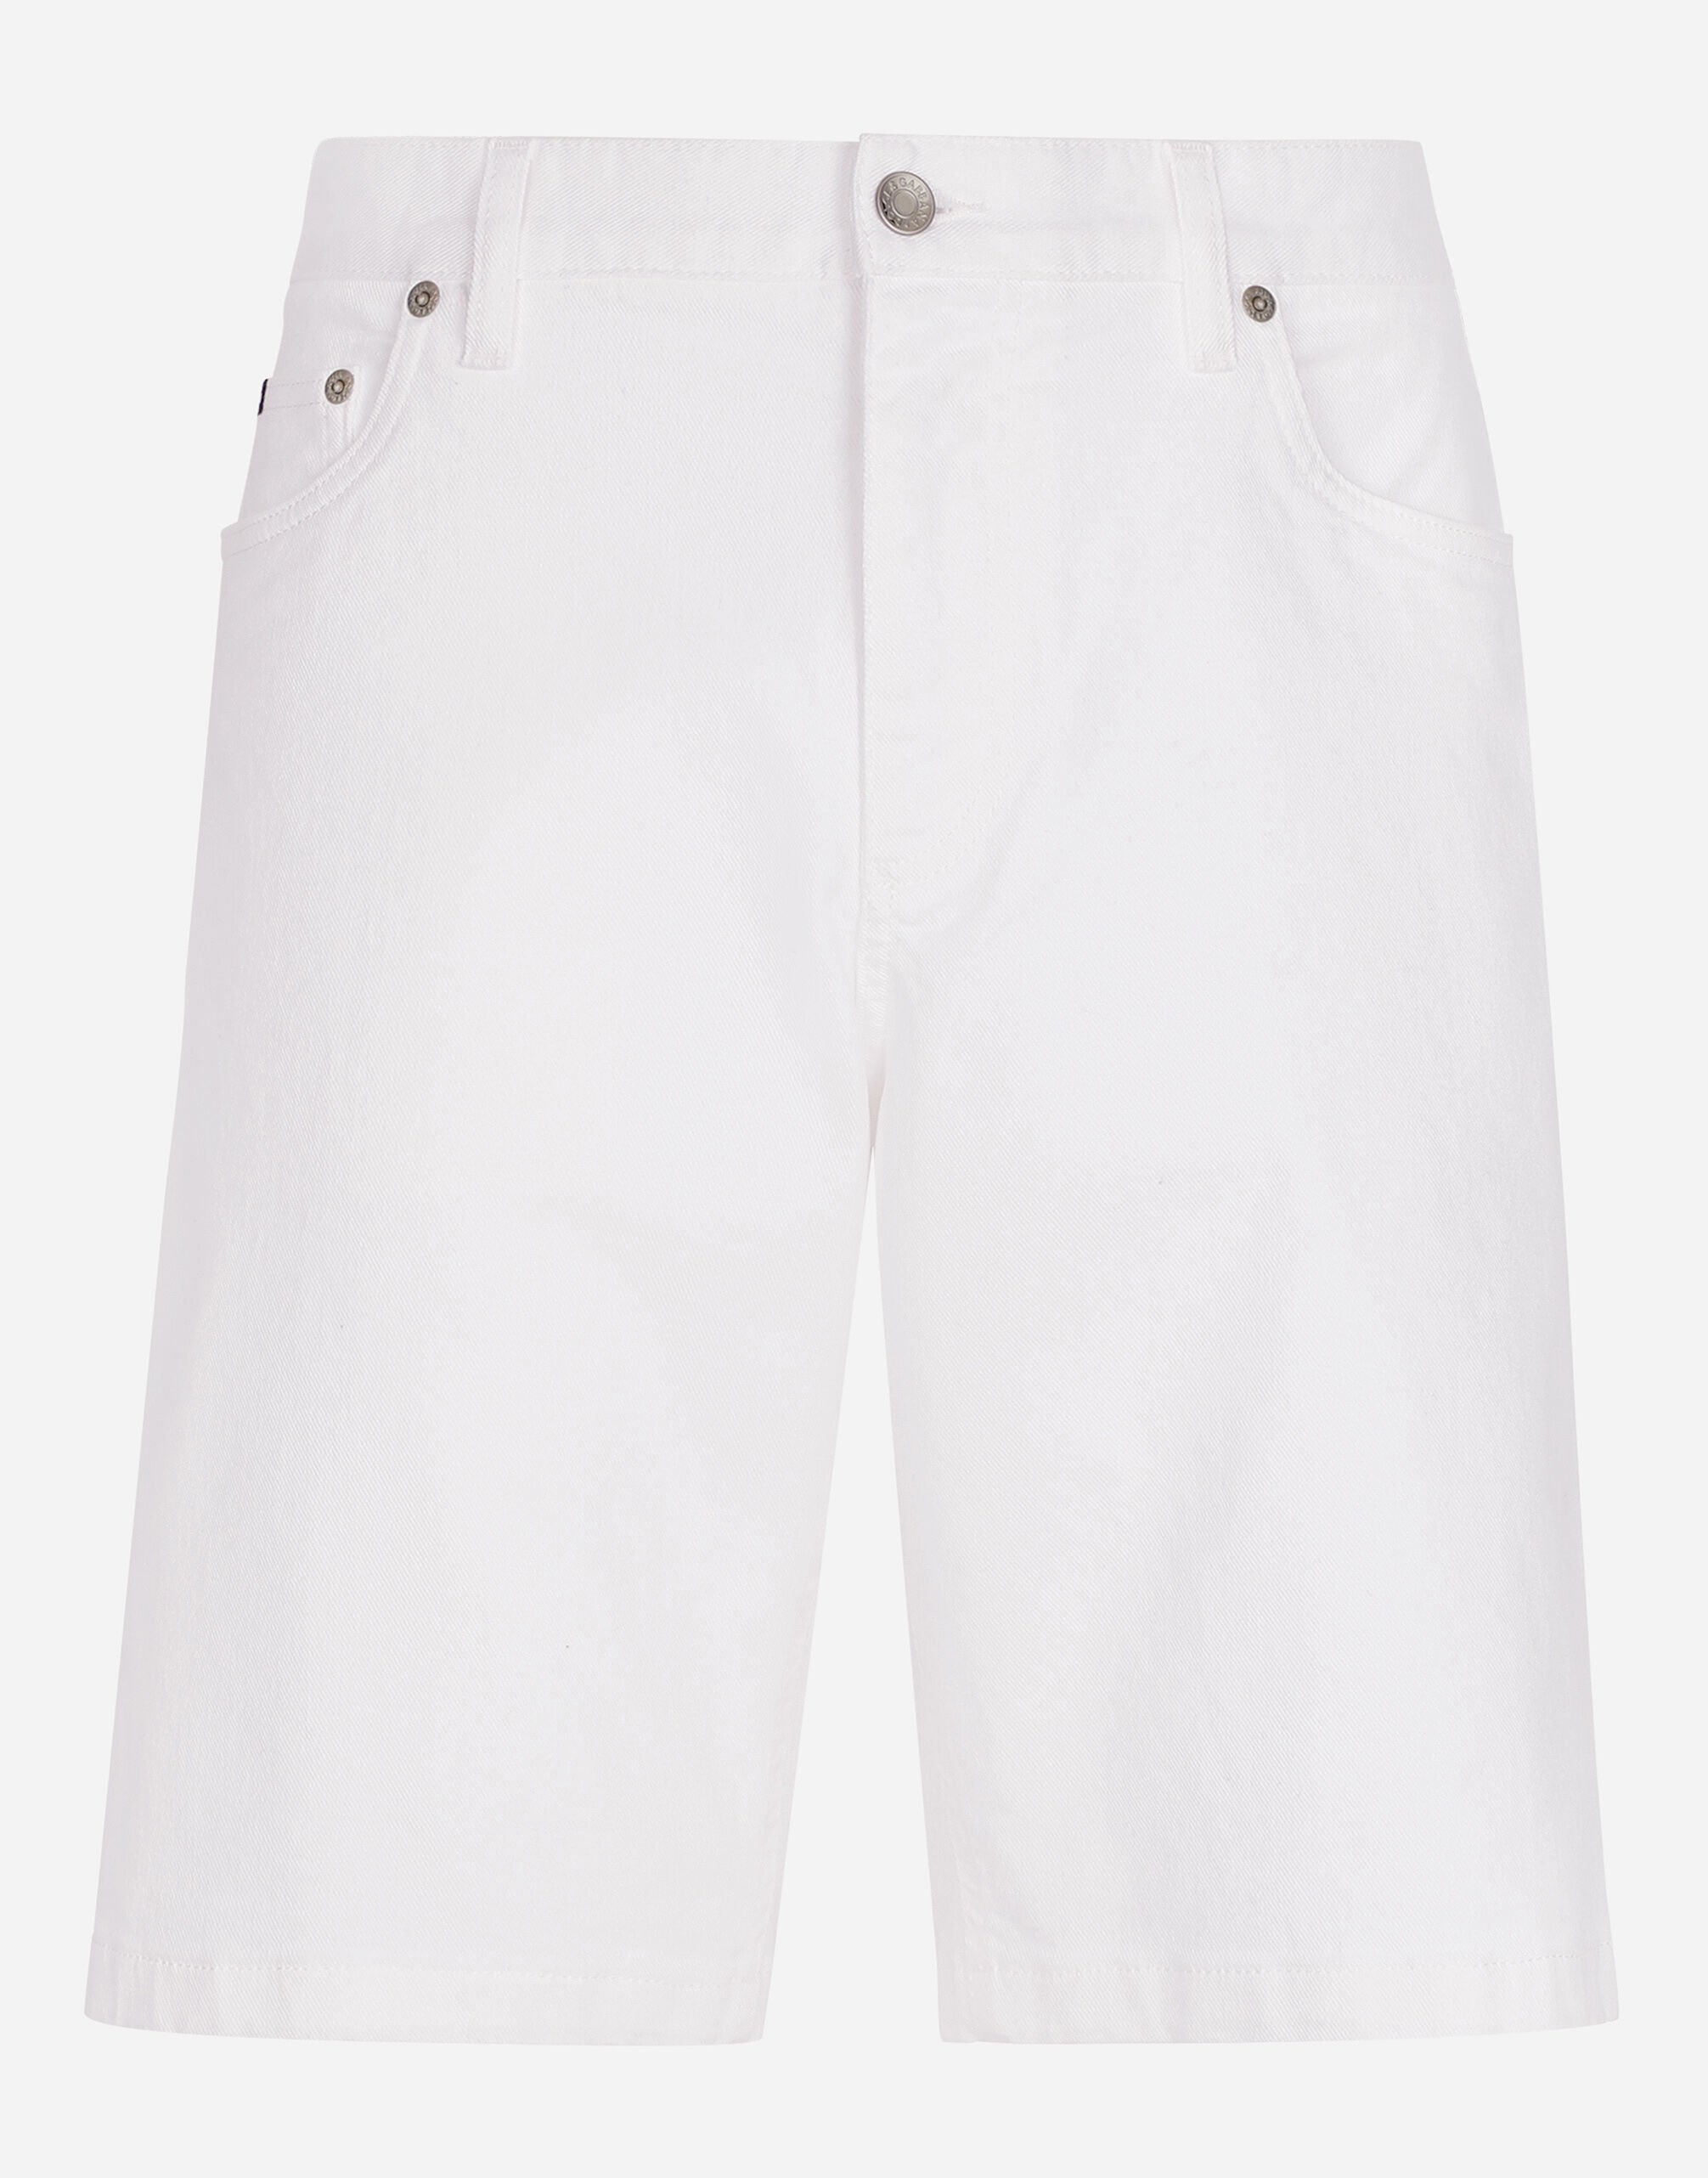 Dolce & Gabbana White stretch denim shorts Multicolor GY07CDG8FS7